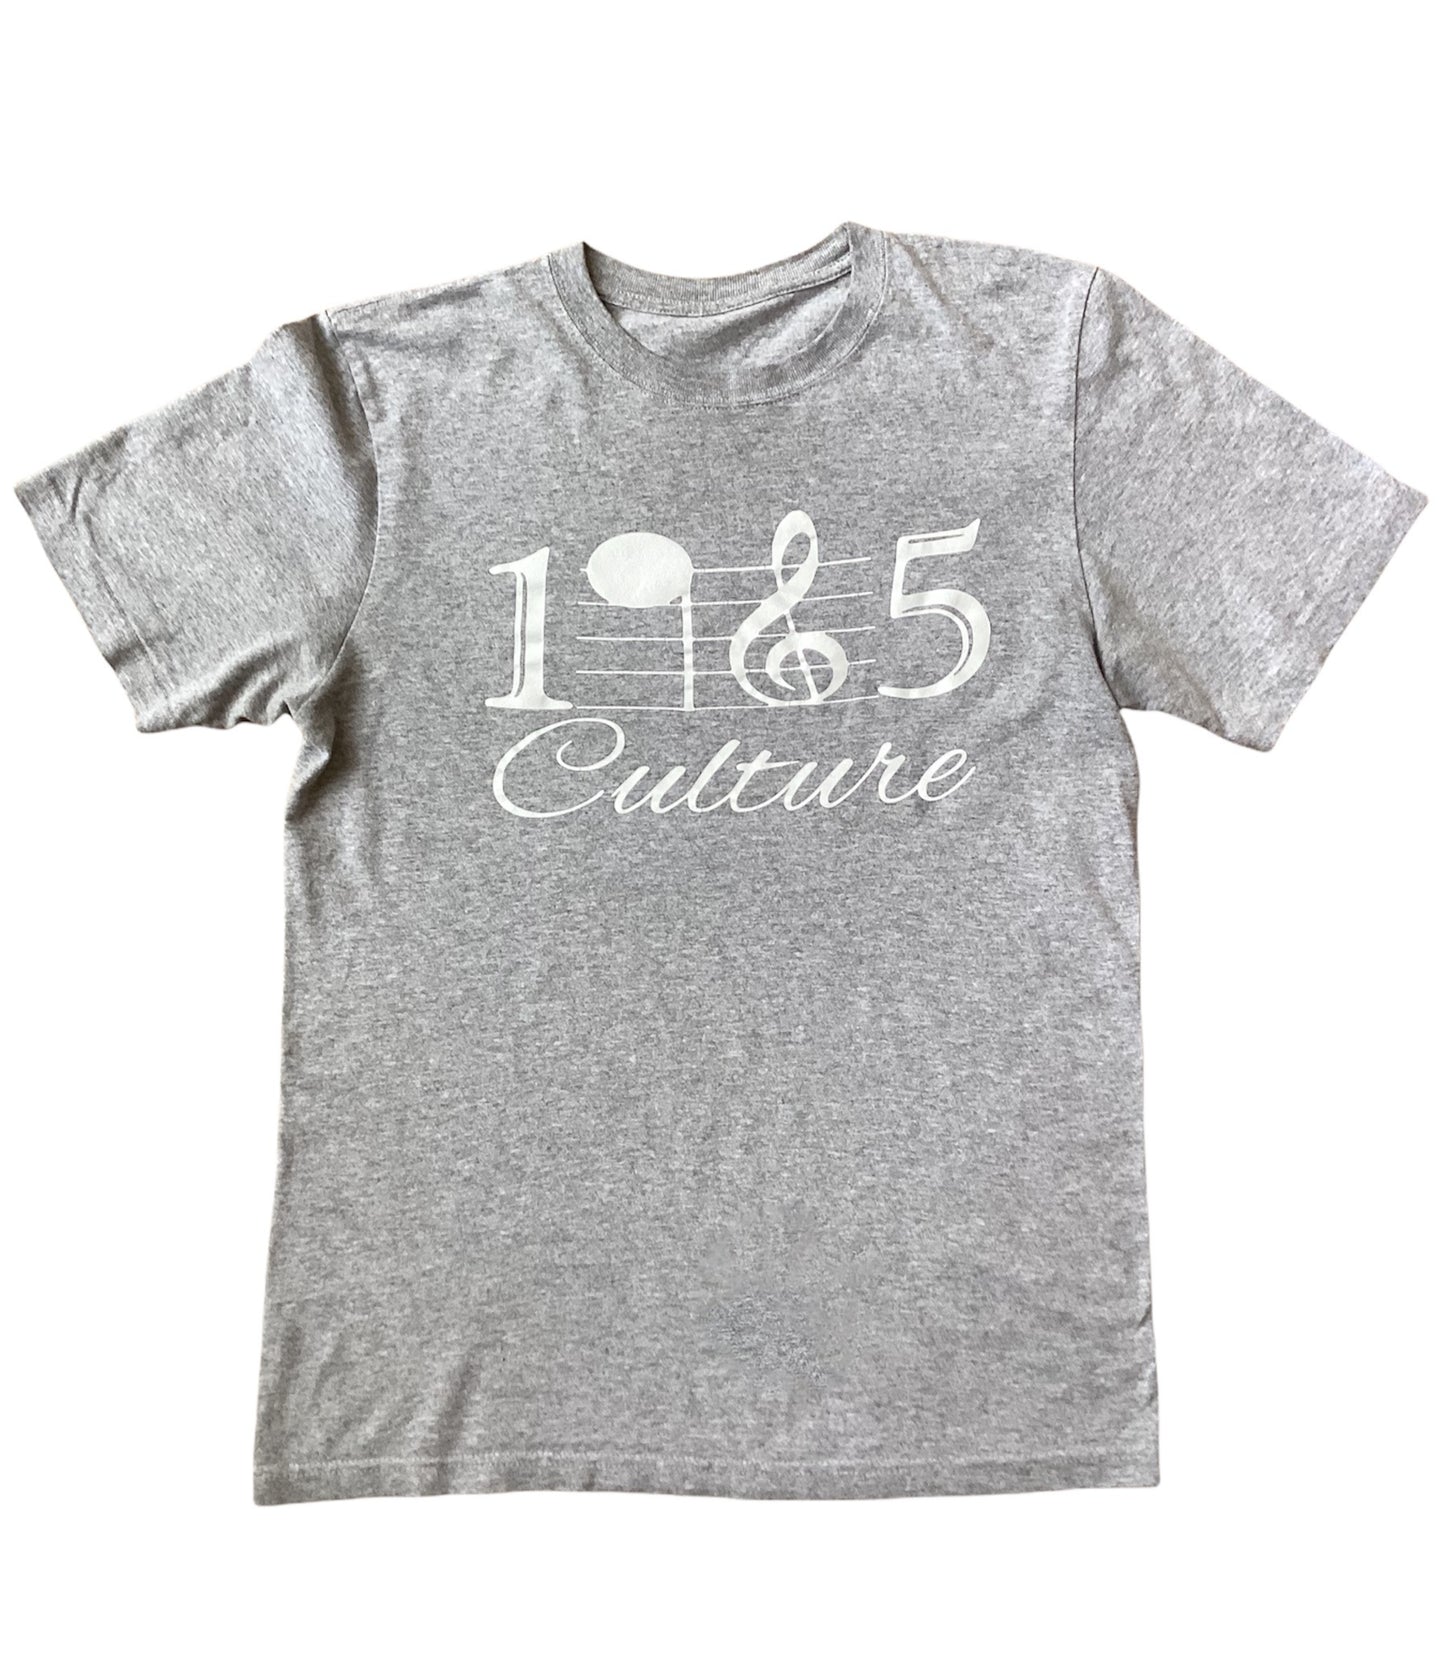 1985 Signature T-Shirt (Assorted colors)